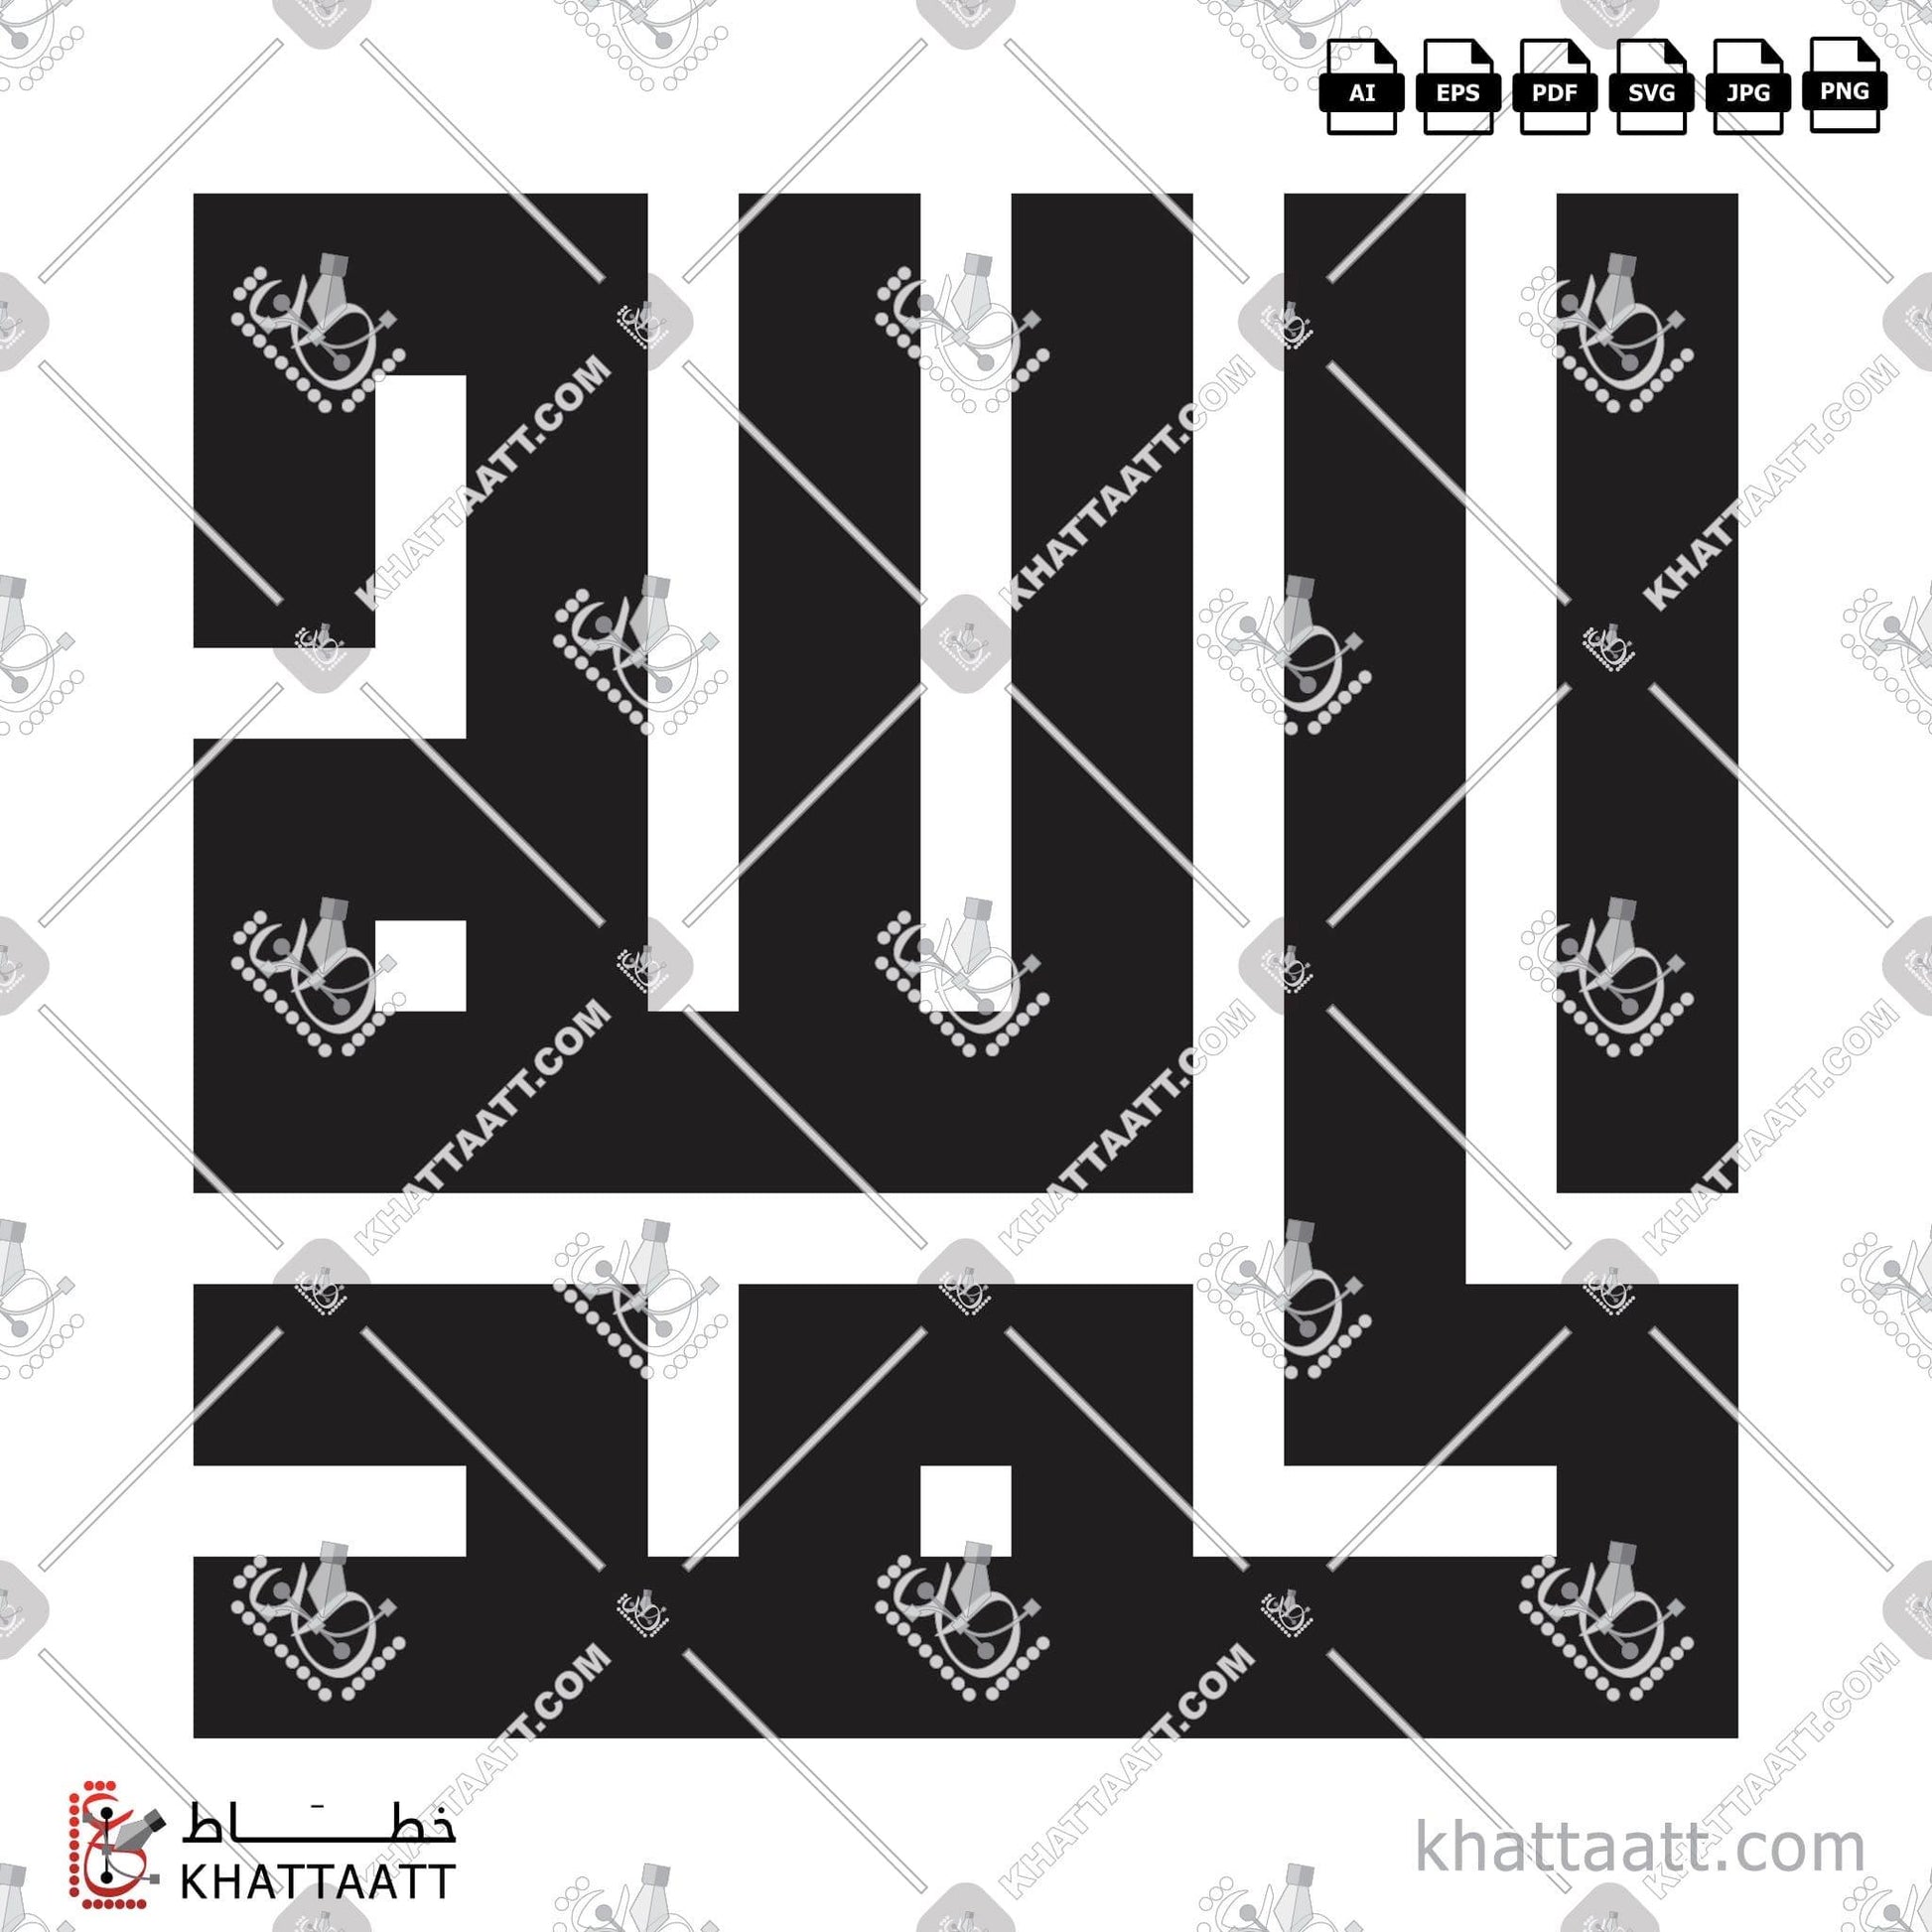 Digital Arabic calligraphy vector of Alhamdulillah - الحمد لله in Kufi - الخط الكوفي